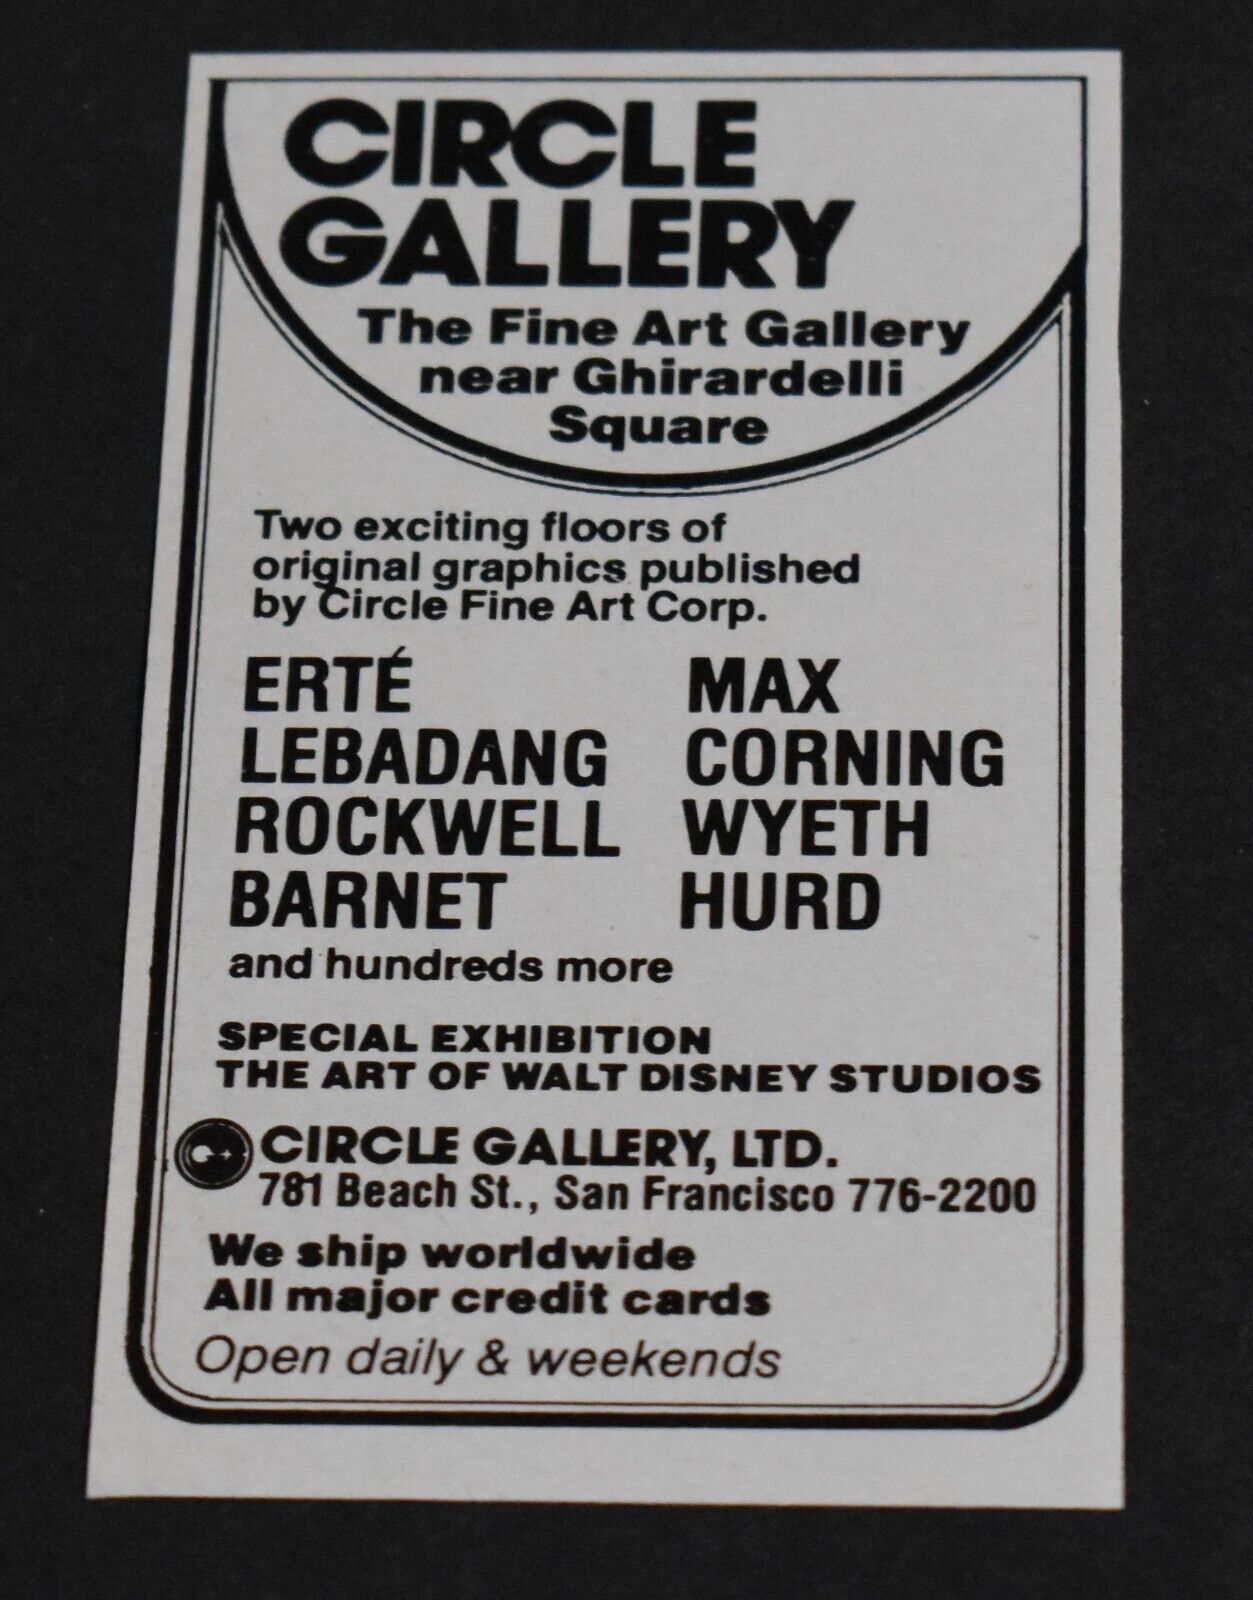 1979 Print Ad San Francisco Circle Gallery Fine Art Ghirdelli Square 781 Beach